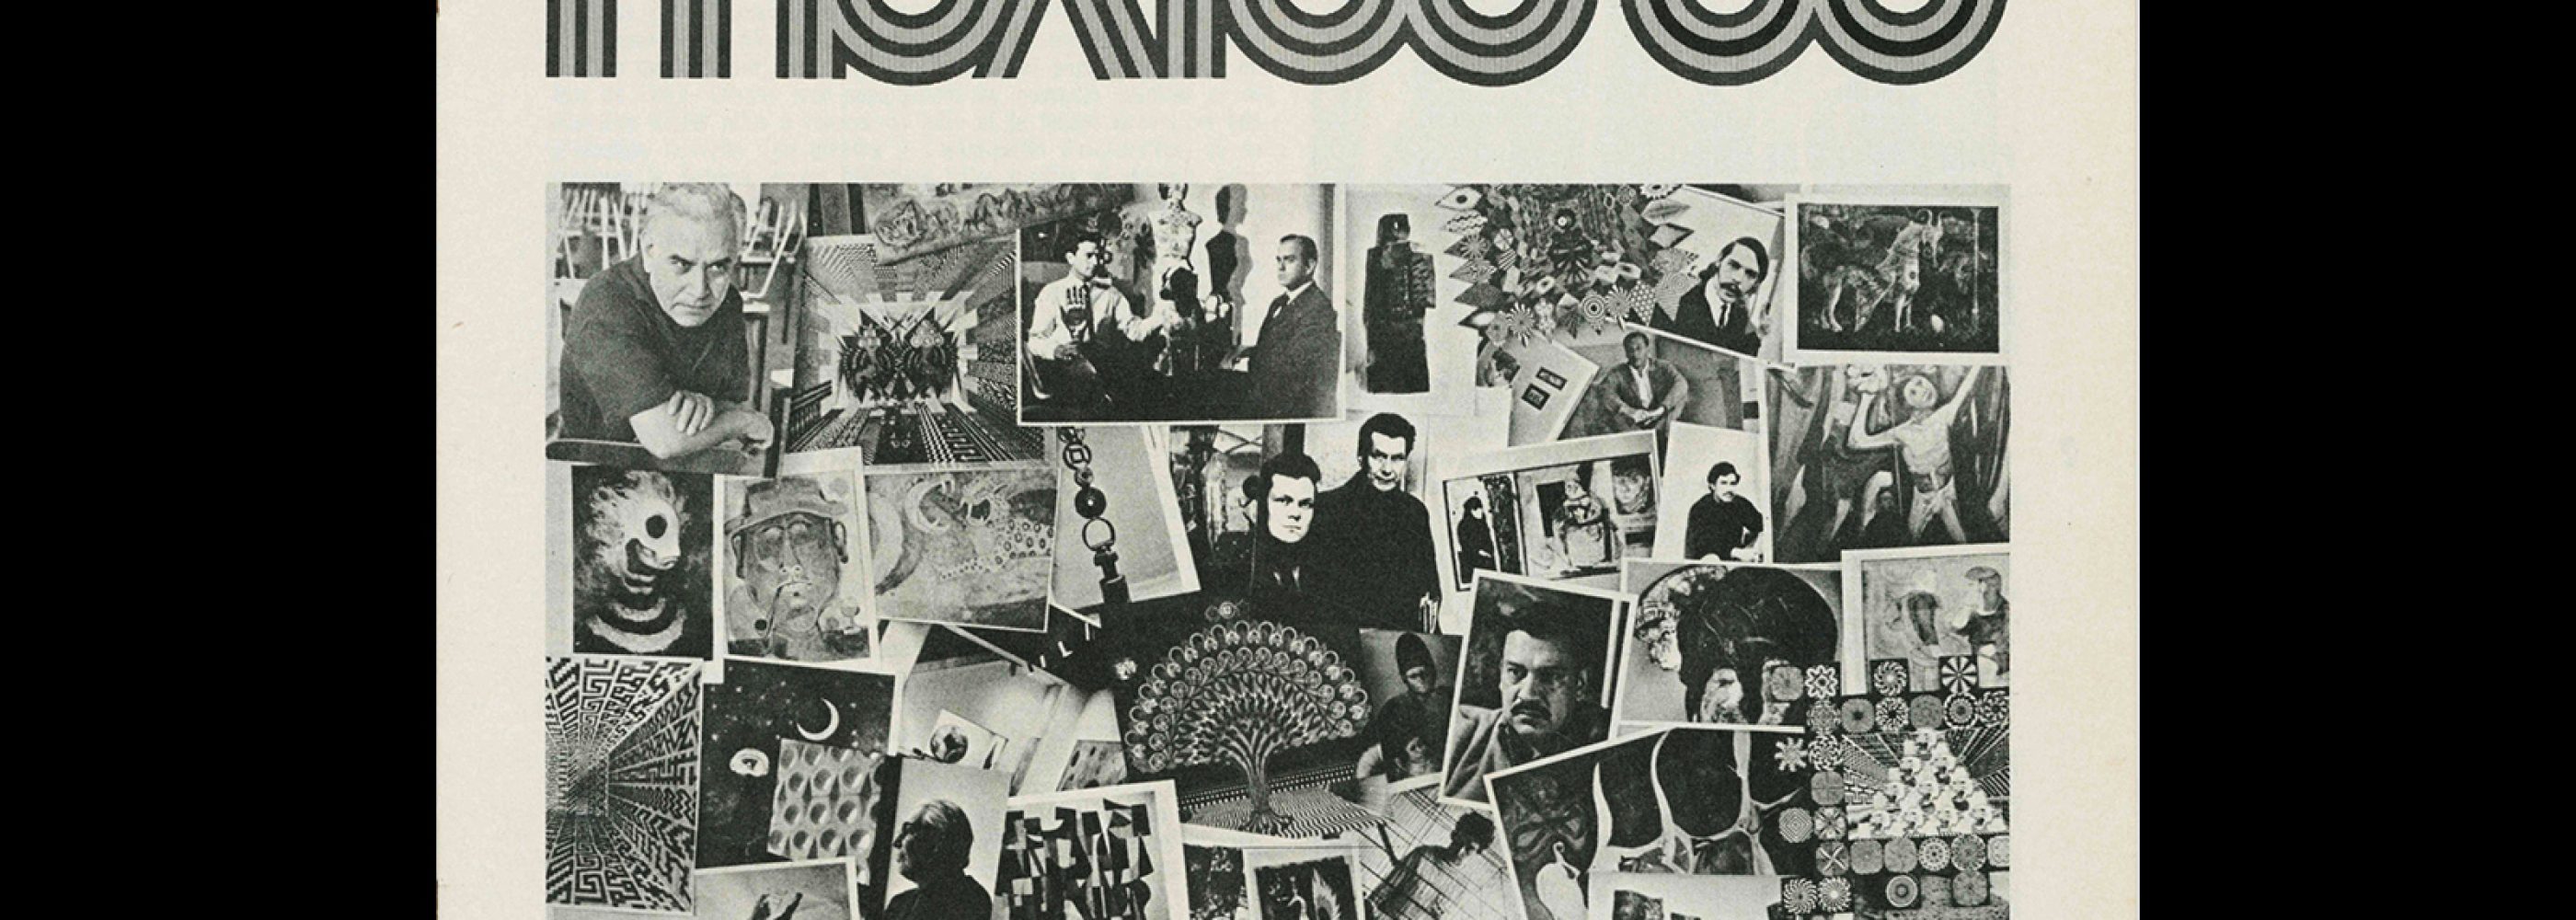 Mexico 1968, Photo - Revue 3, 1968. Designed by Lance Wyman